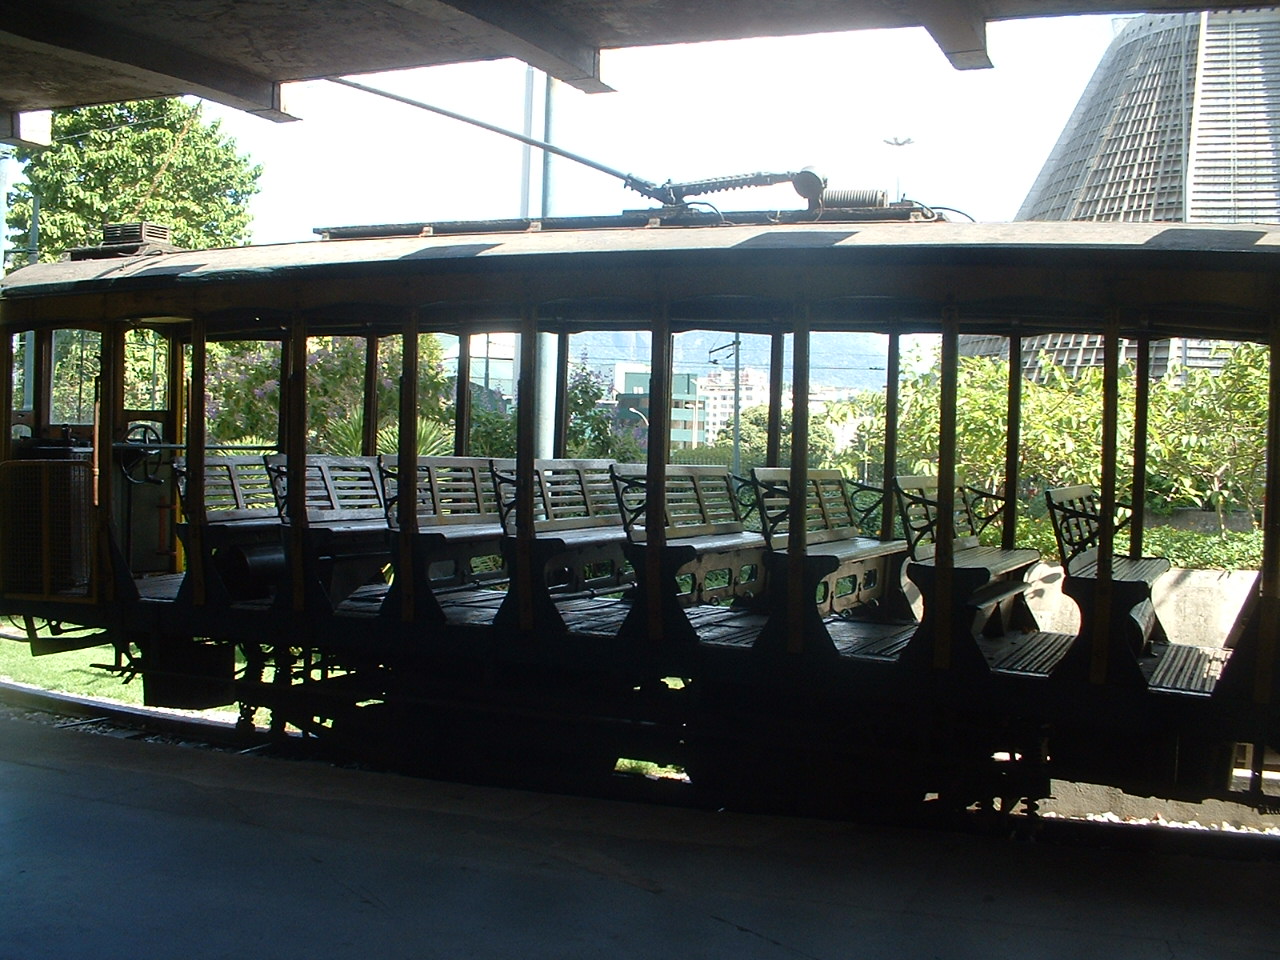 Rio Santa Teresa tram photo